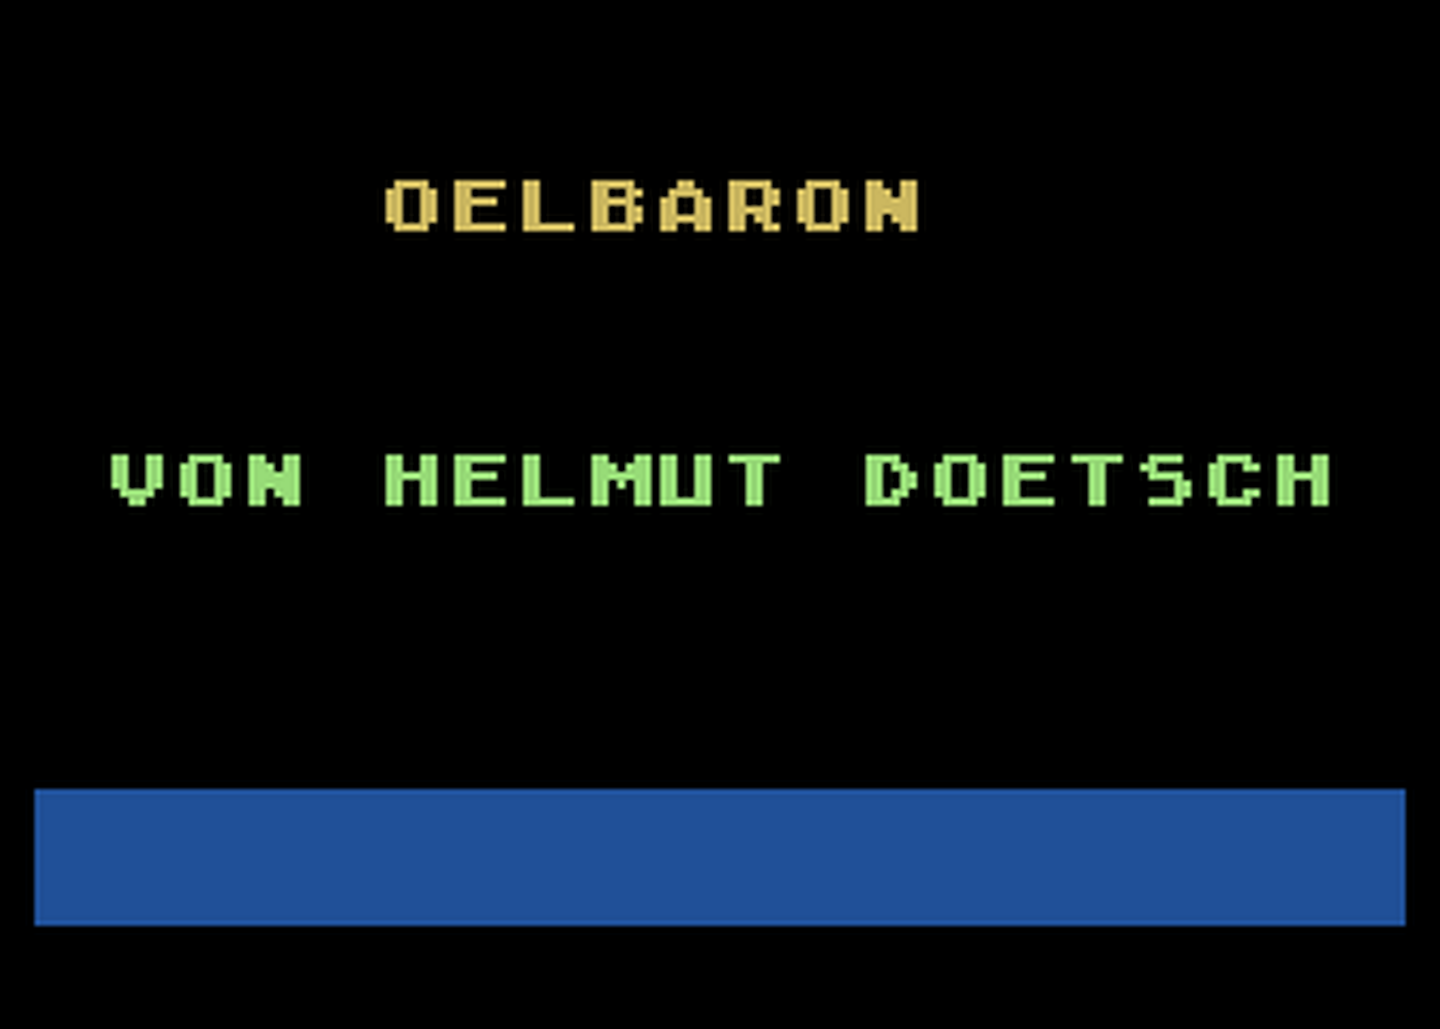 Atari GameBase Oelbaron (No_Publisher)